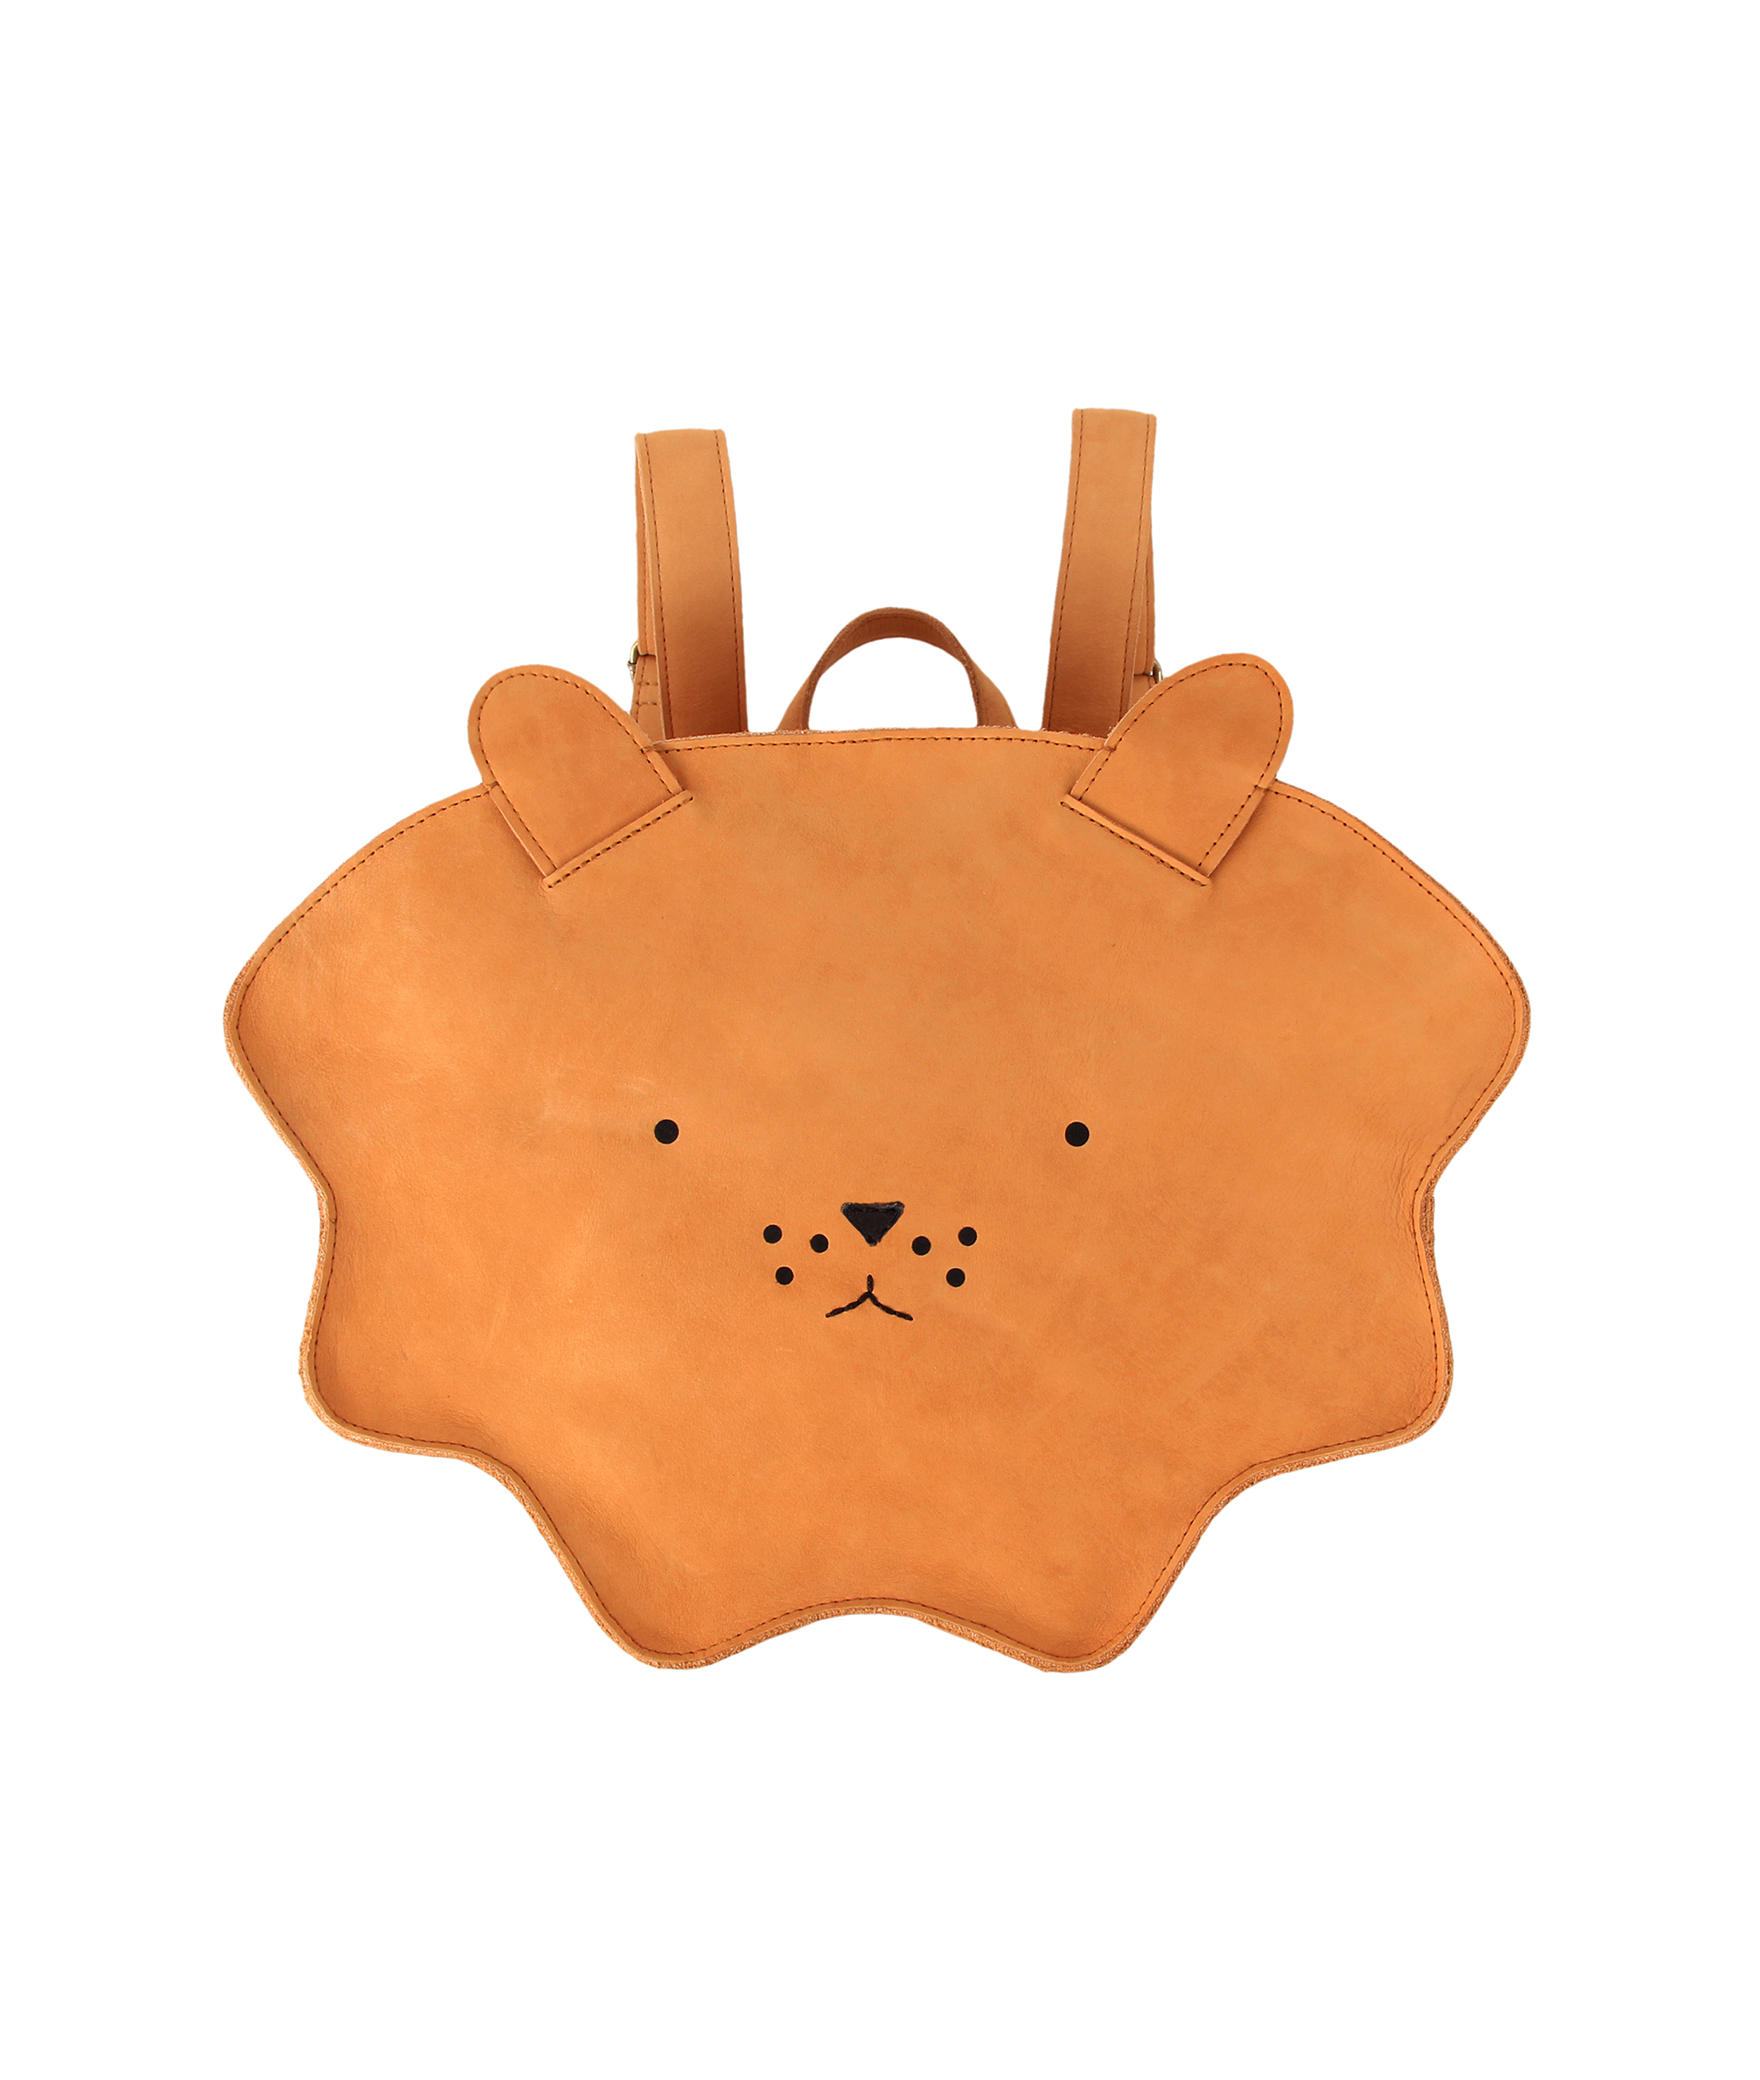 Umi Schoolbag Lion